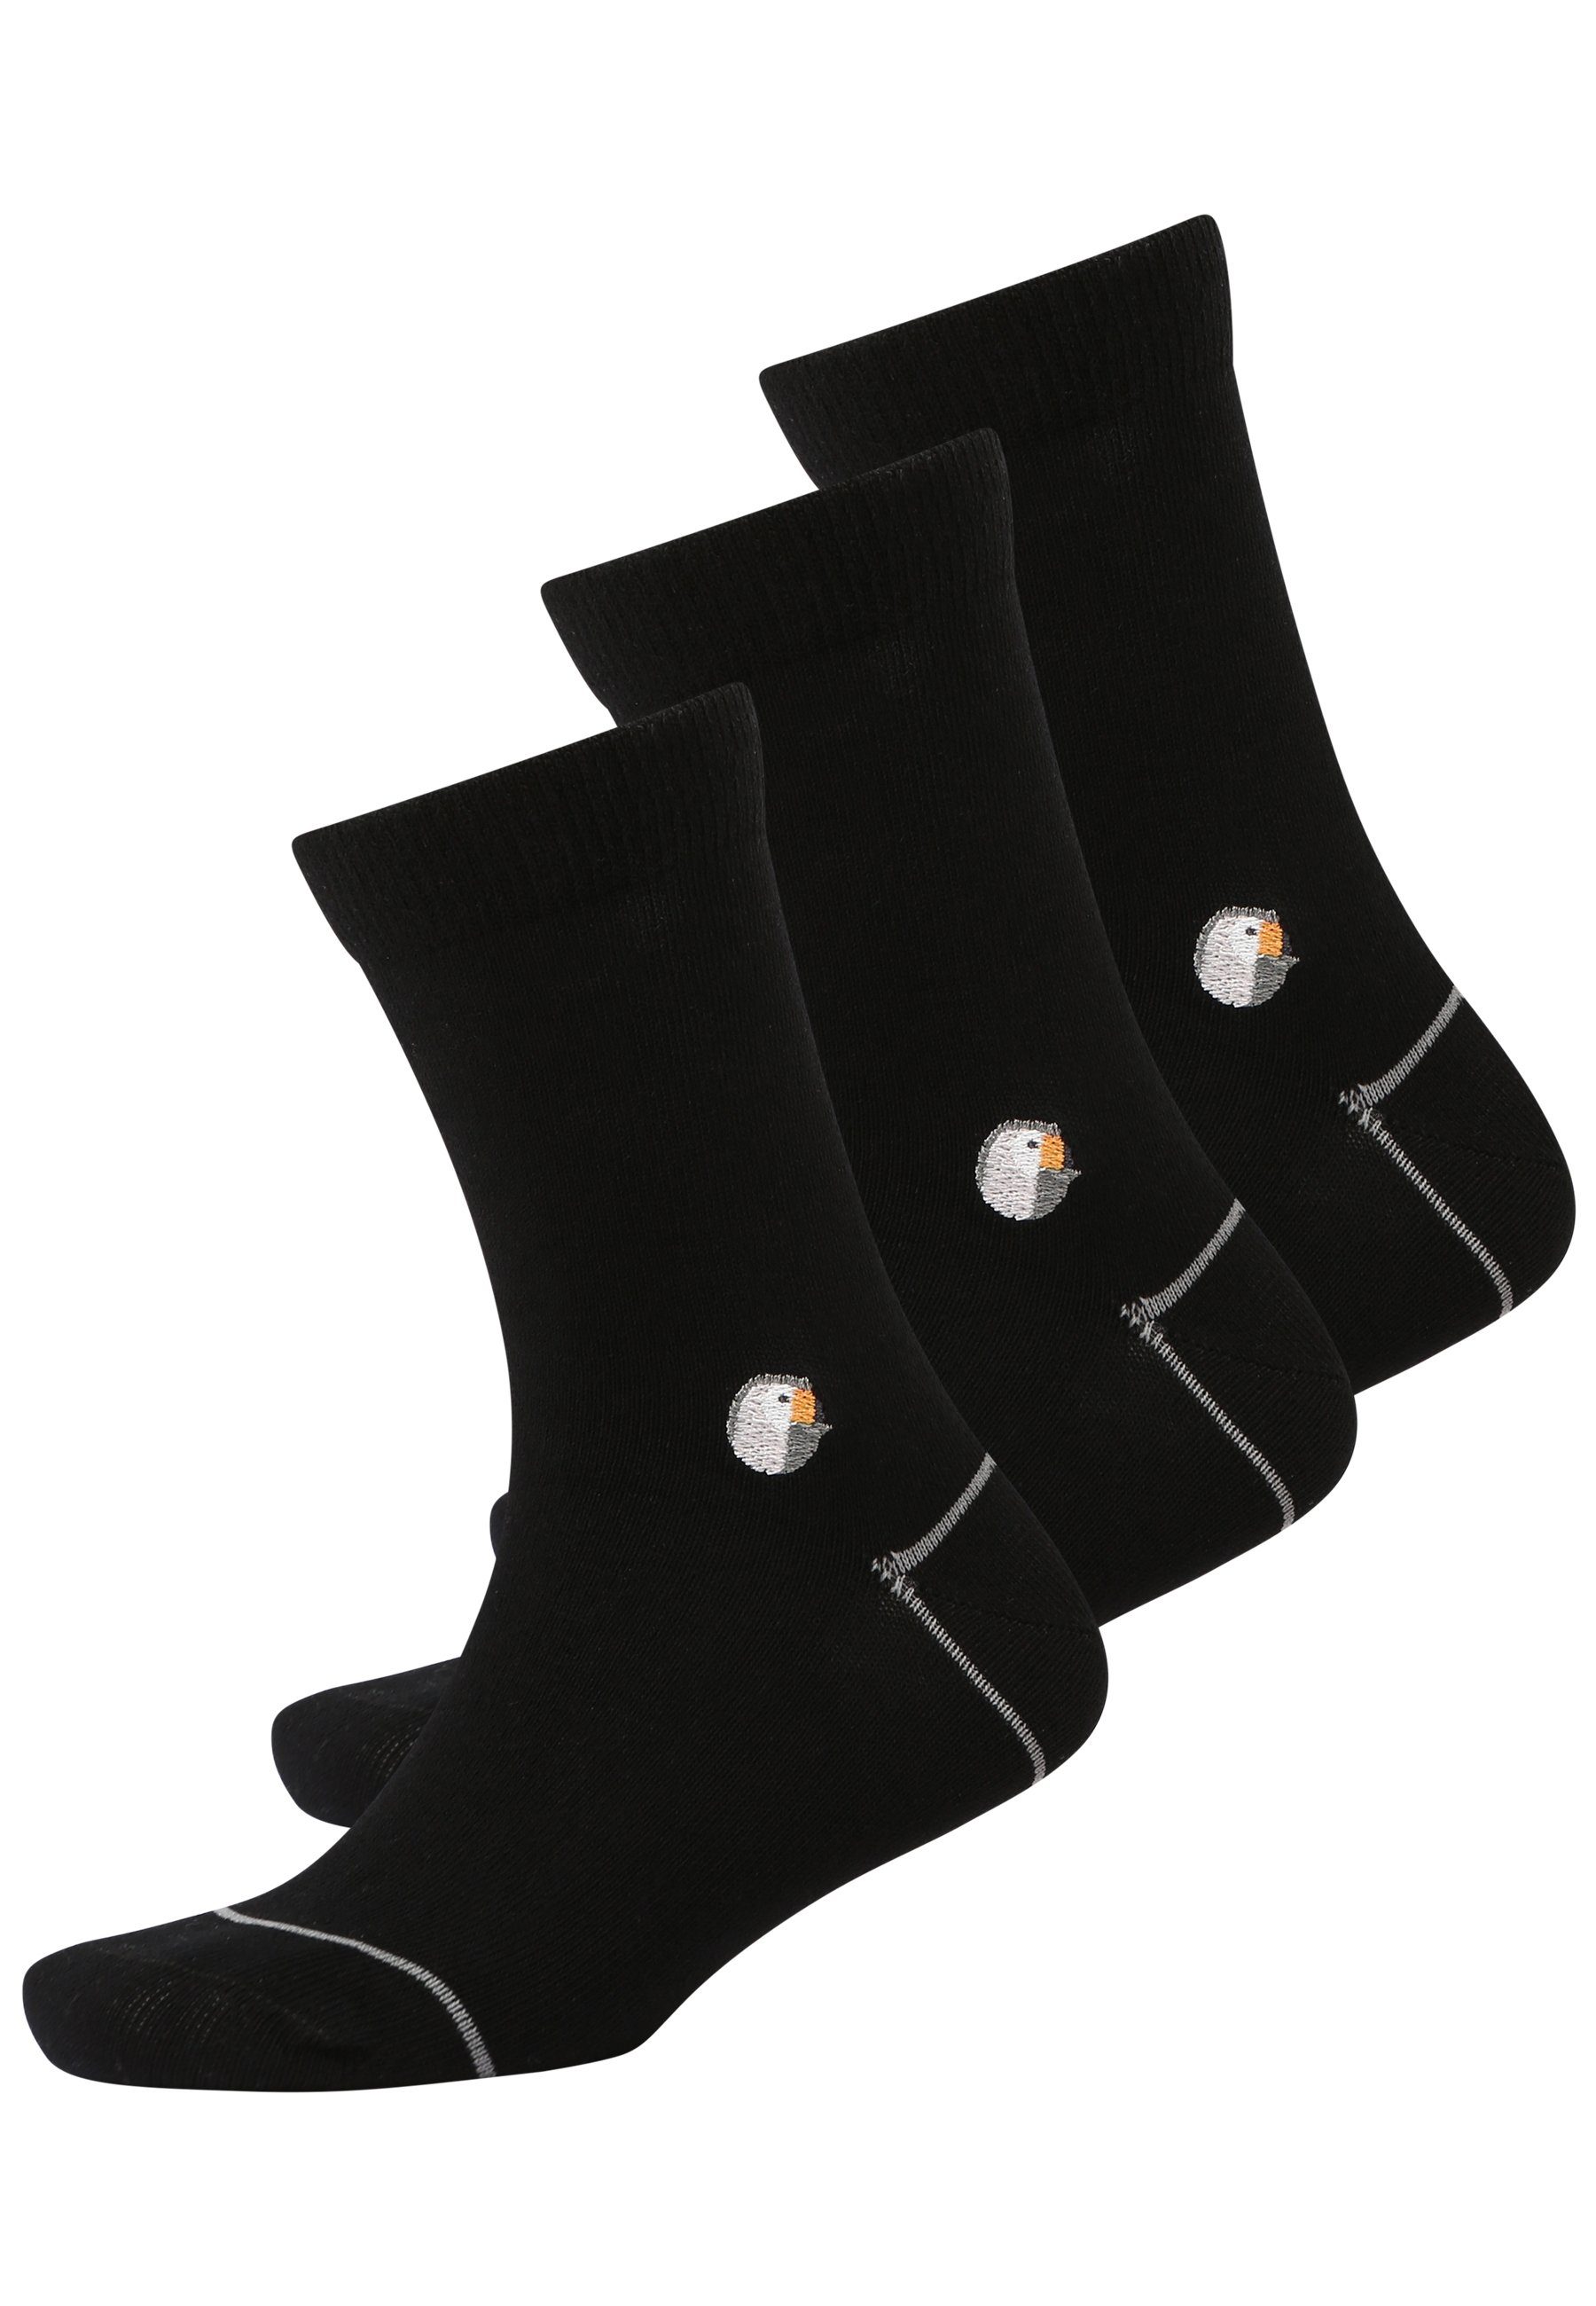 Sokid Socken Set 1 3er Pack (3-Paar) GOTS zertifizierte Bio-Baumwolle